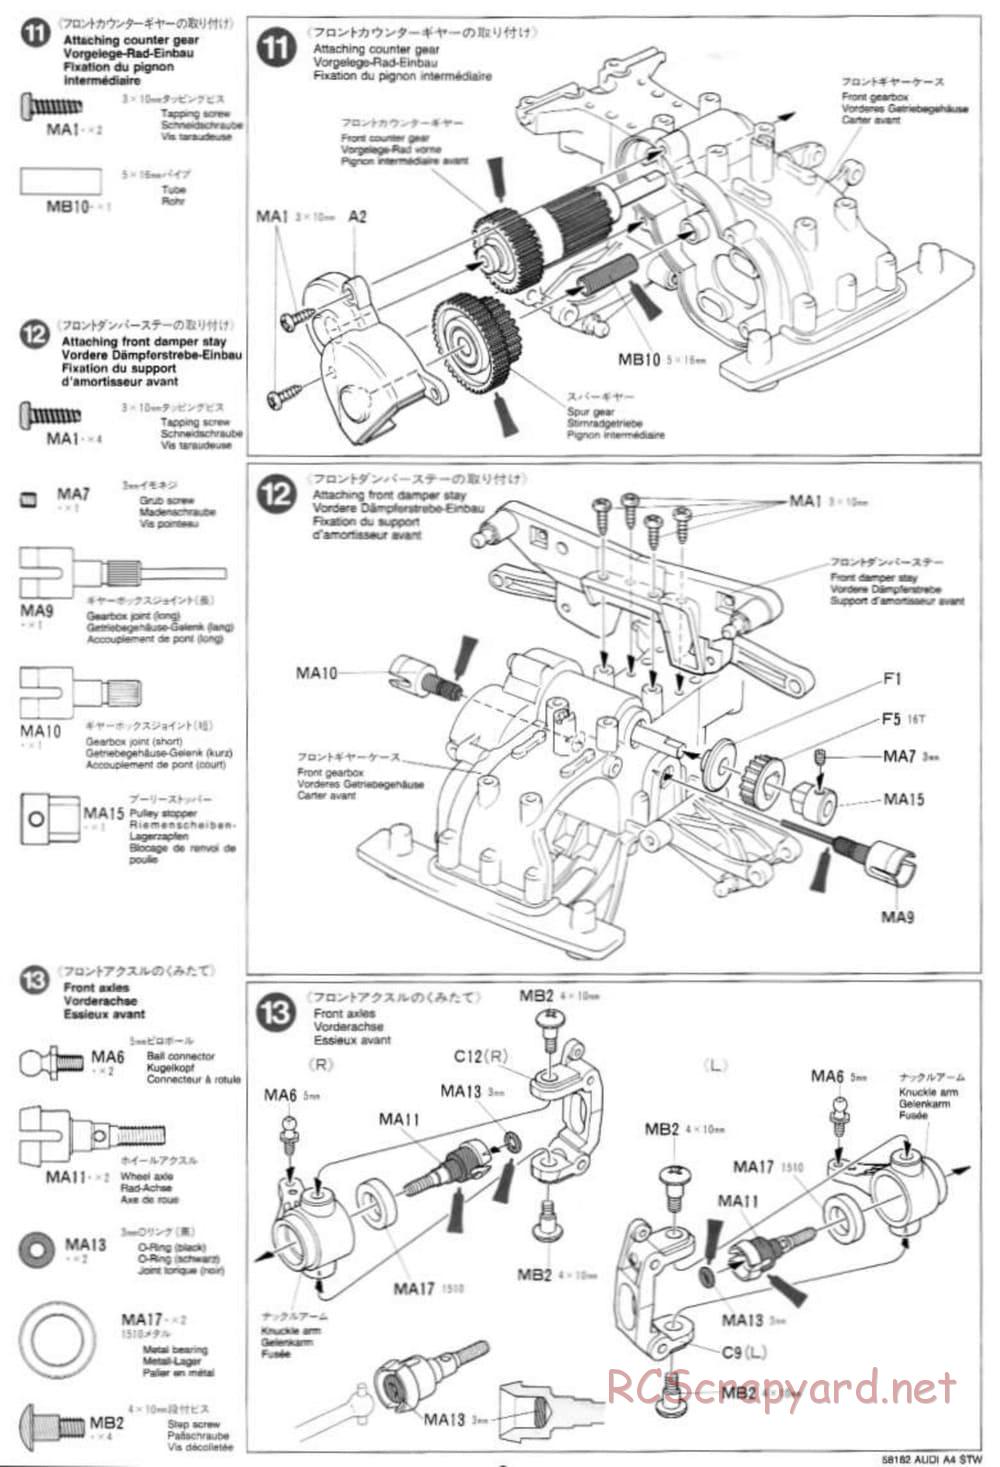 Tamiya - Audi A4 STW - TA-03F Chassis - Manual - Page 8